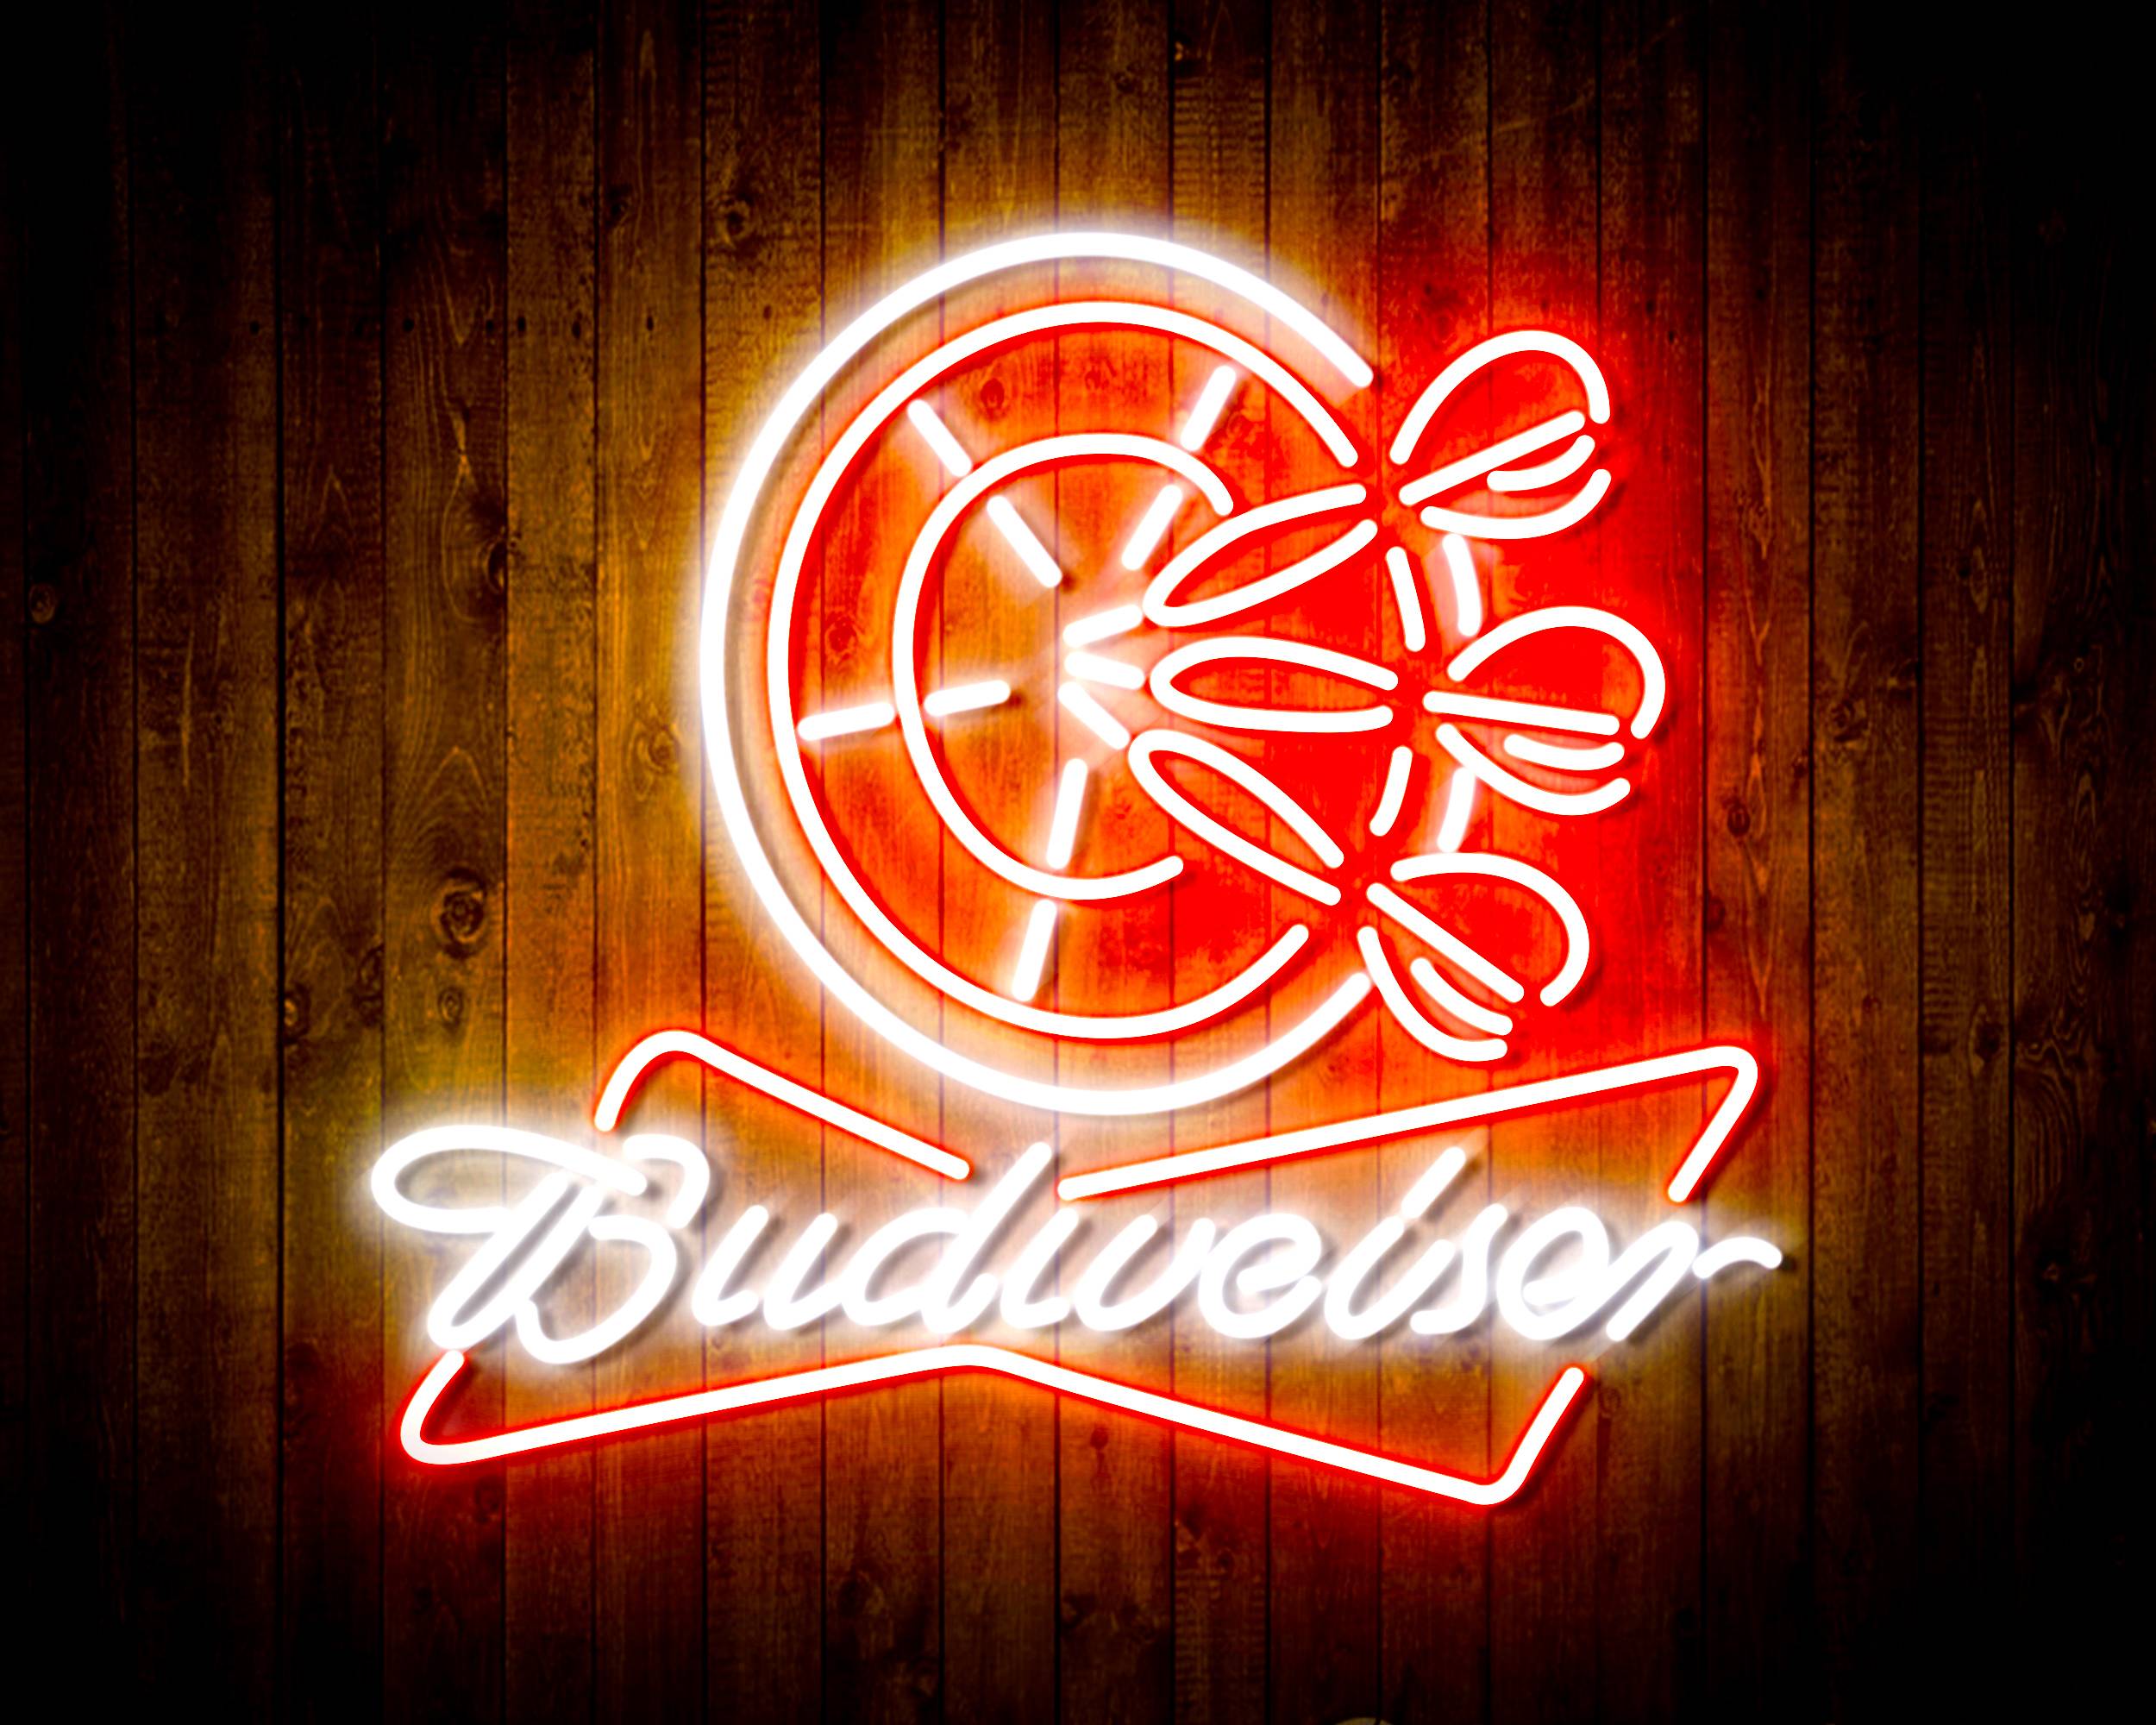 Budweiser with Dart Board Handmade LED Neon Sign